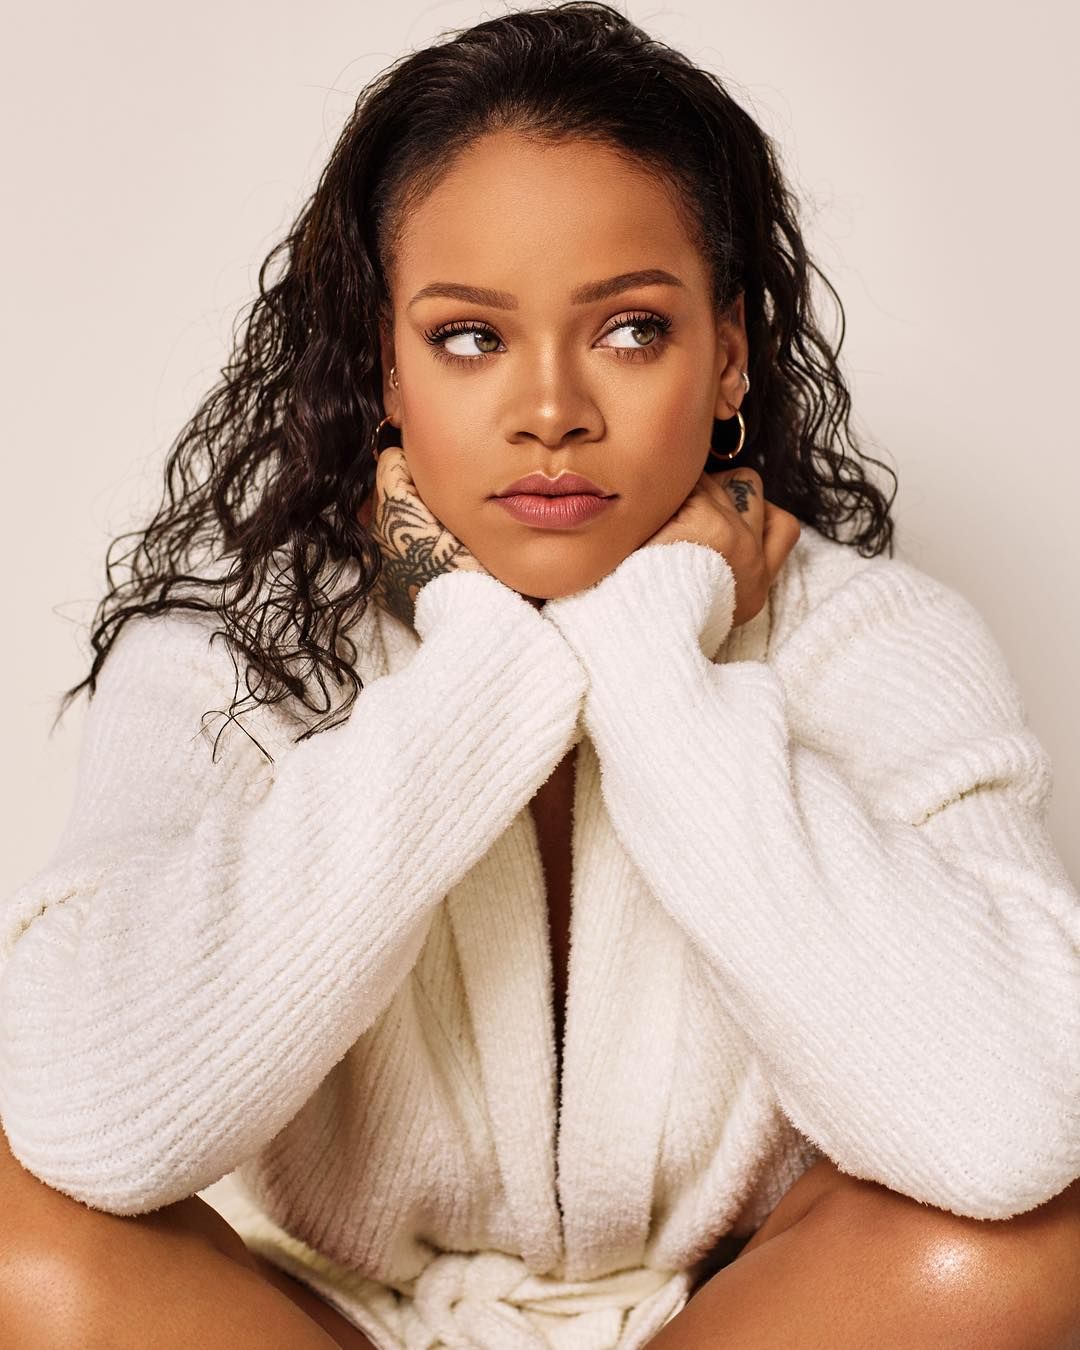 Di luar karier musiknya, Rihanna telah membuat langkah besar bagi wanita baik di bidang mode maupun kecantikan.